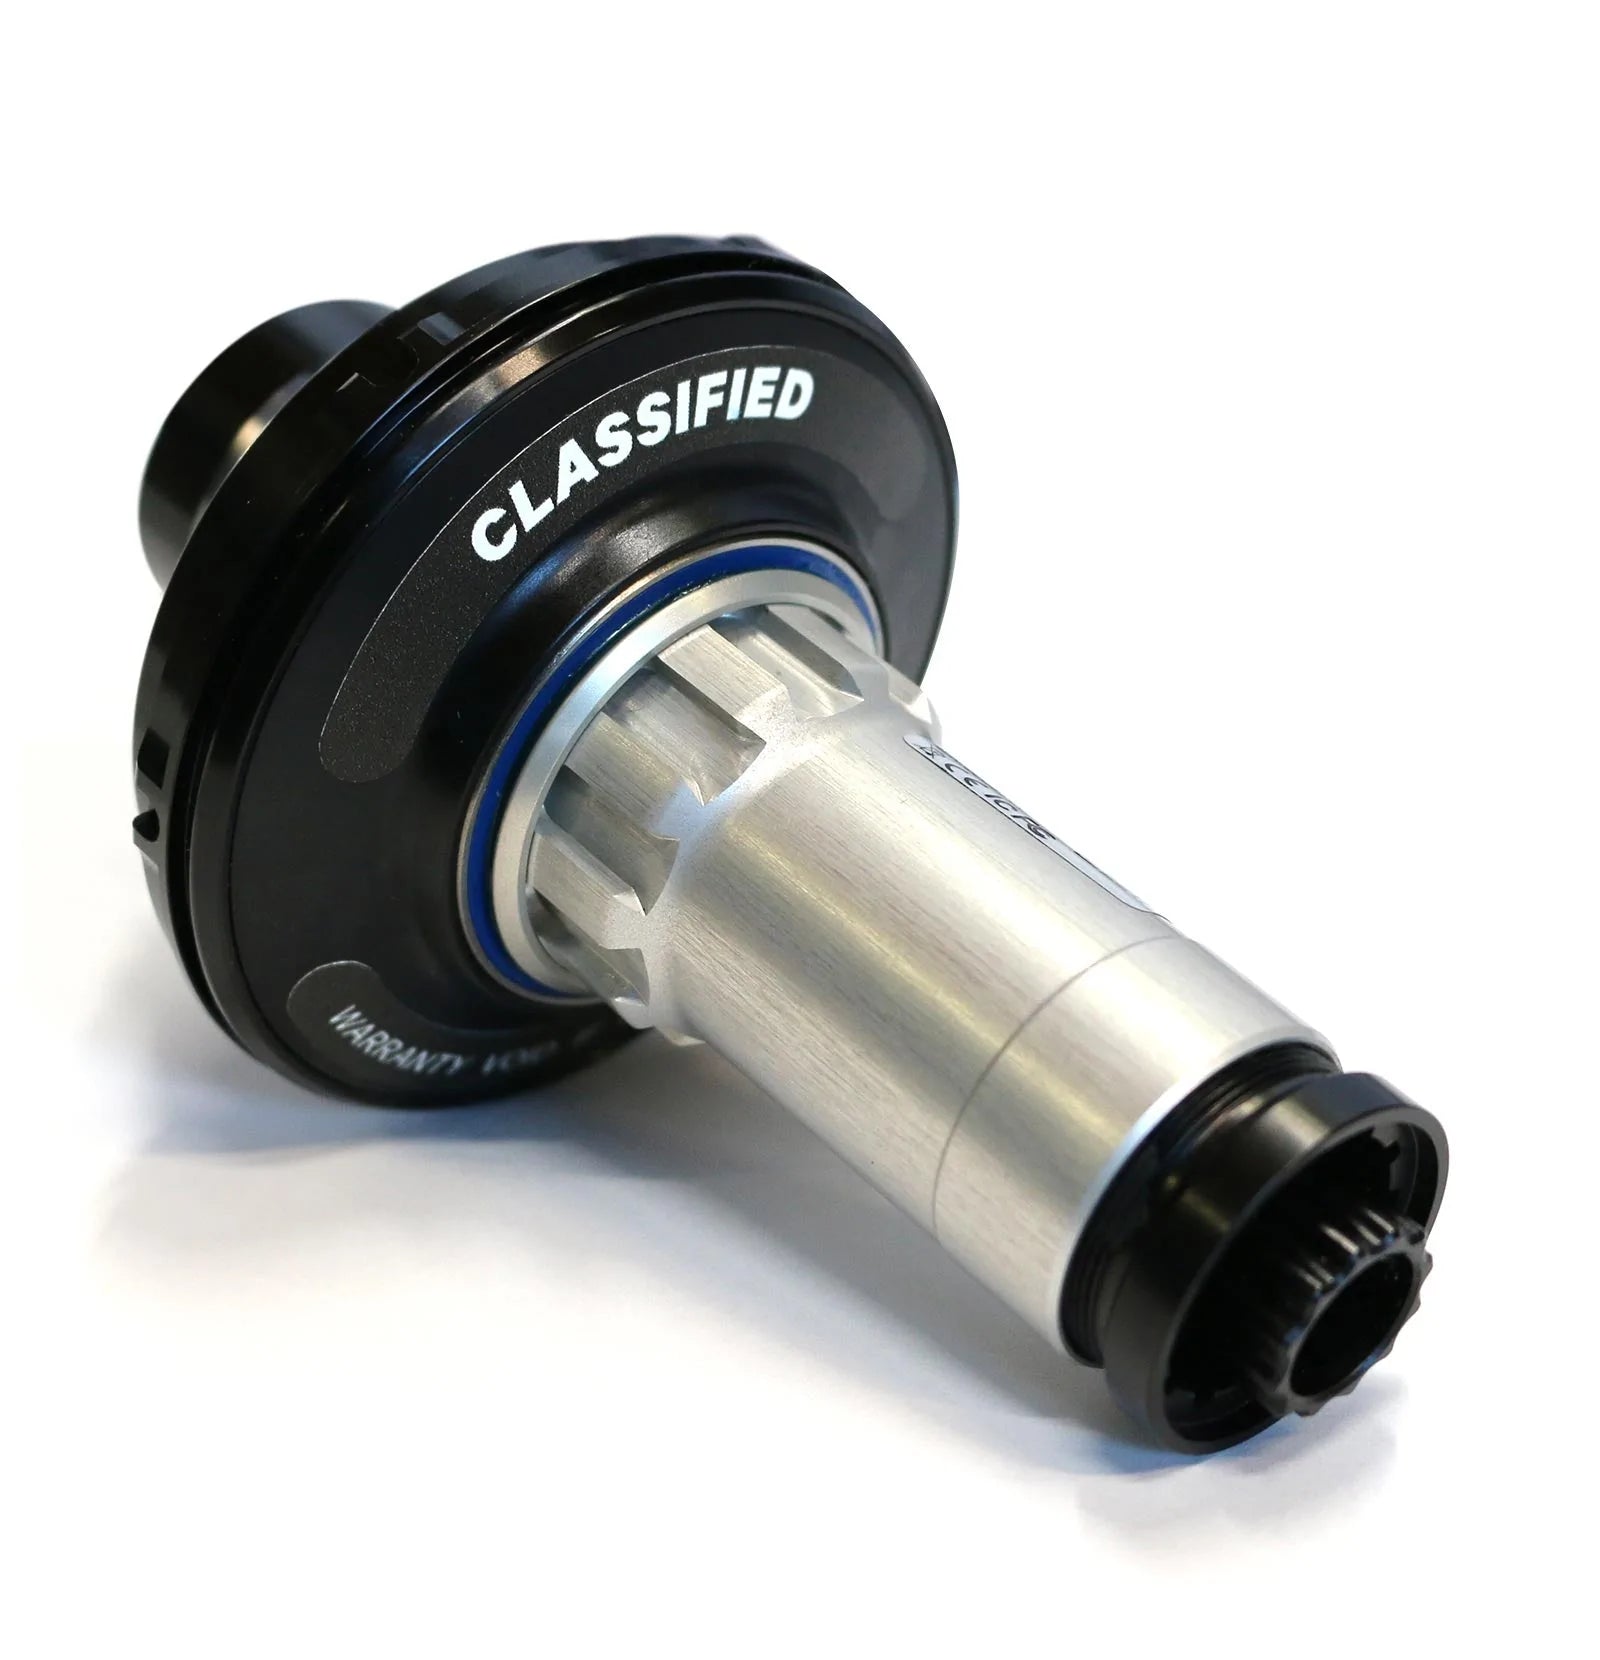 CLASSIFIED CF G30 Powershift Wheelset